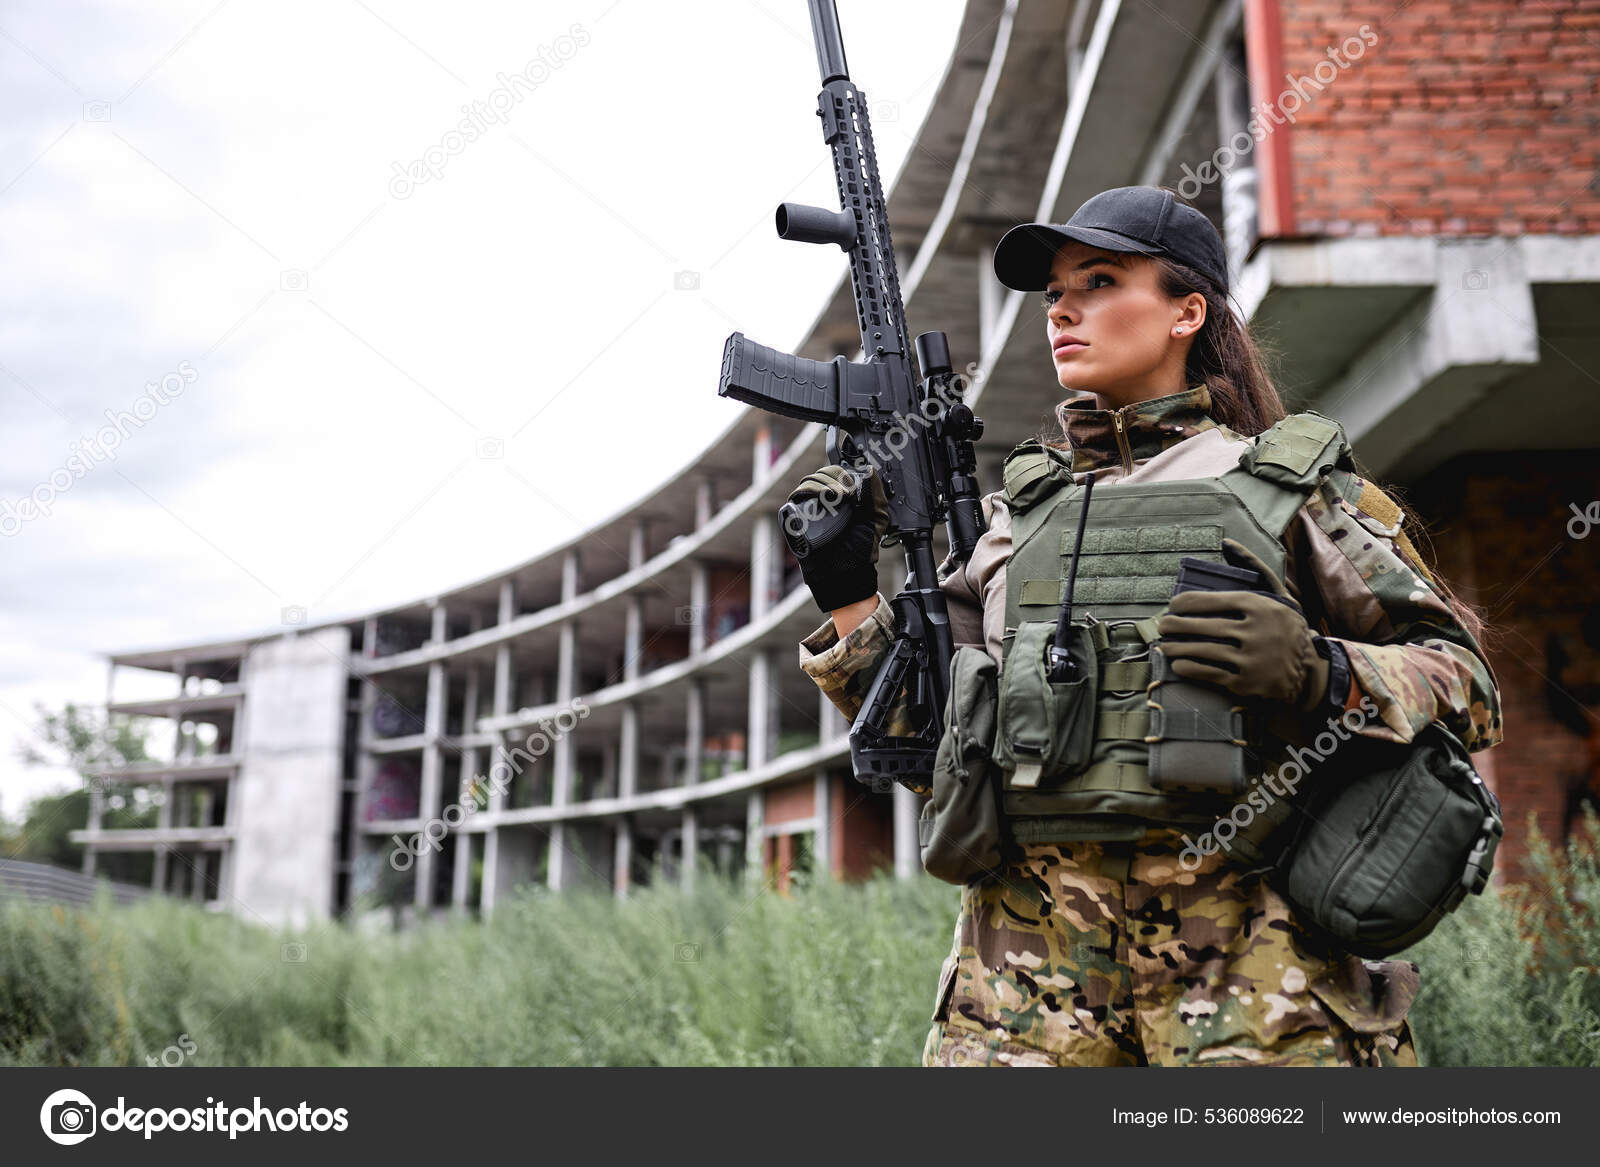 https://st.depositphotos.com/32281612/53608/i/1600/depositphotos_536089622-stock-photo-military-lady-woman-in-tactical.jpg